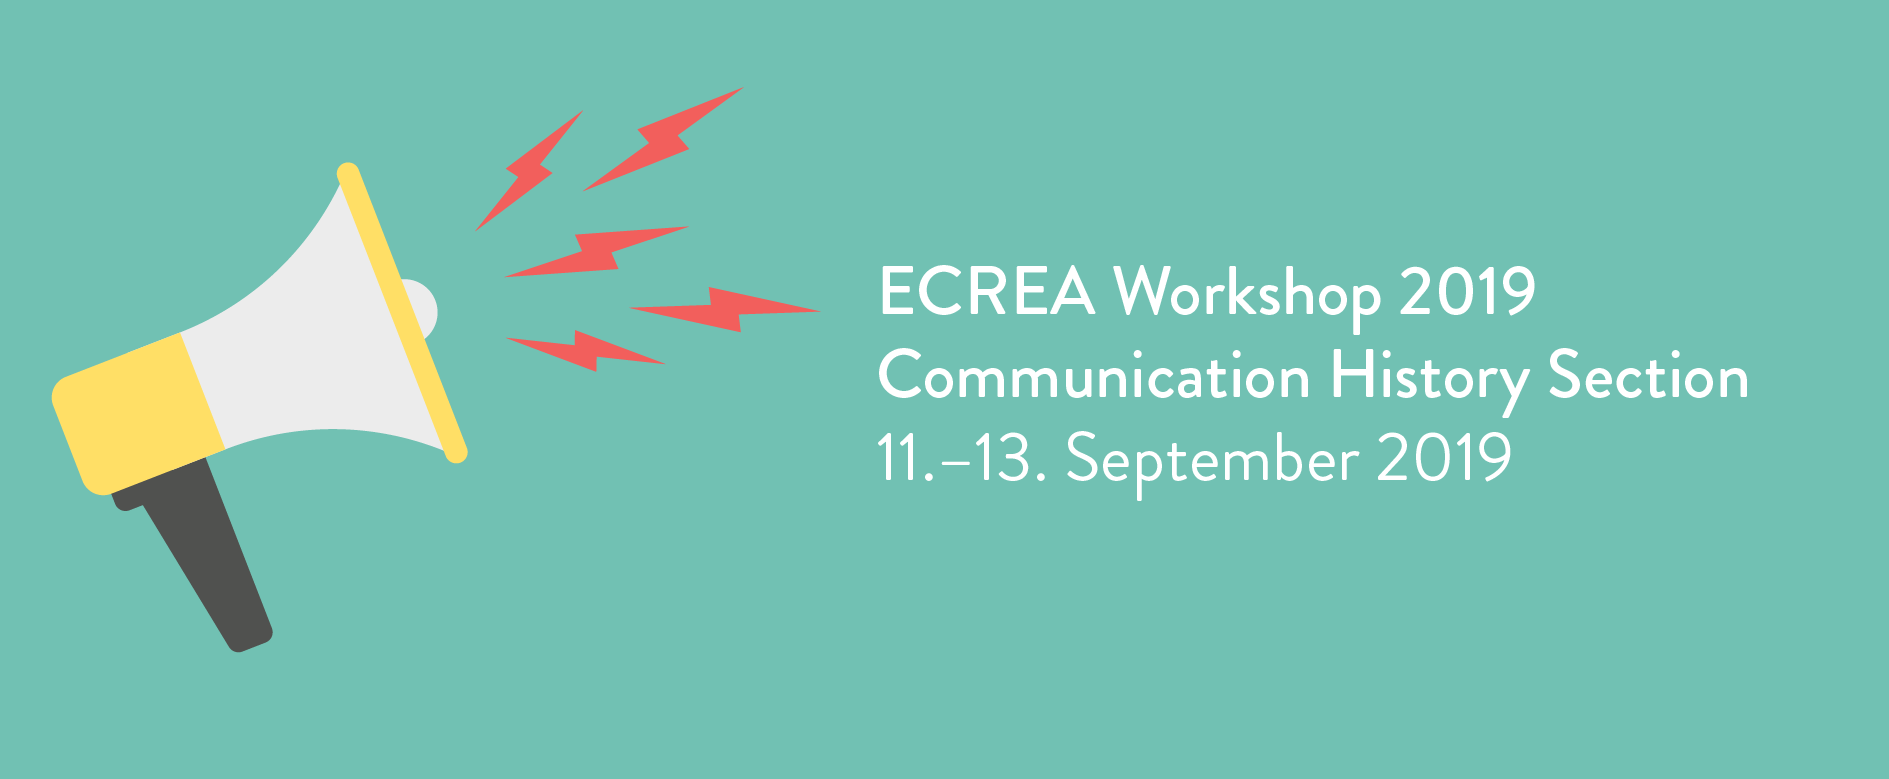 ECREA Workshop 2019 Banner